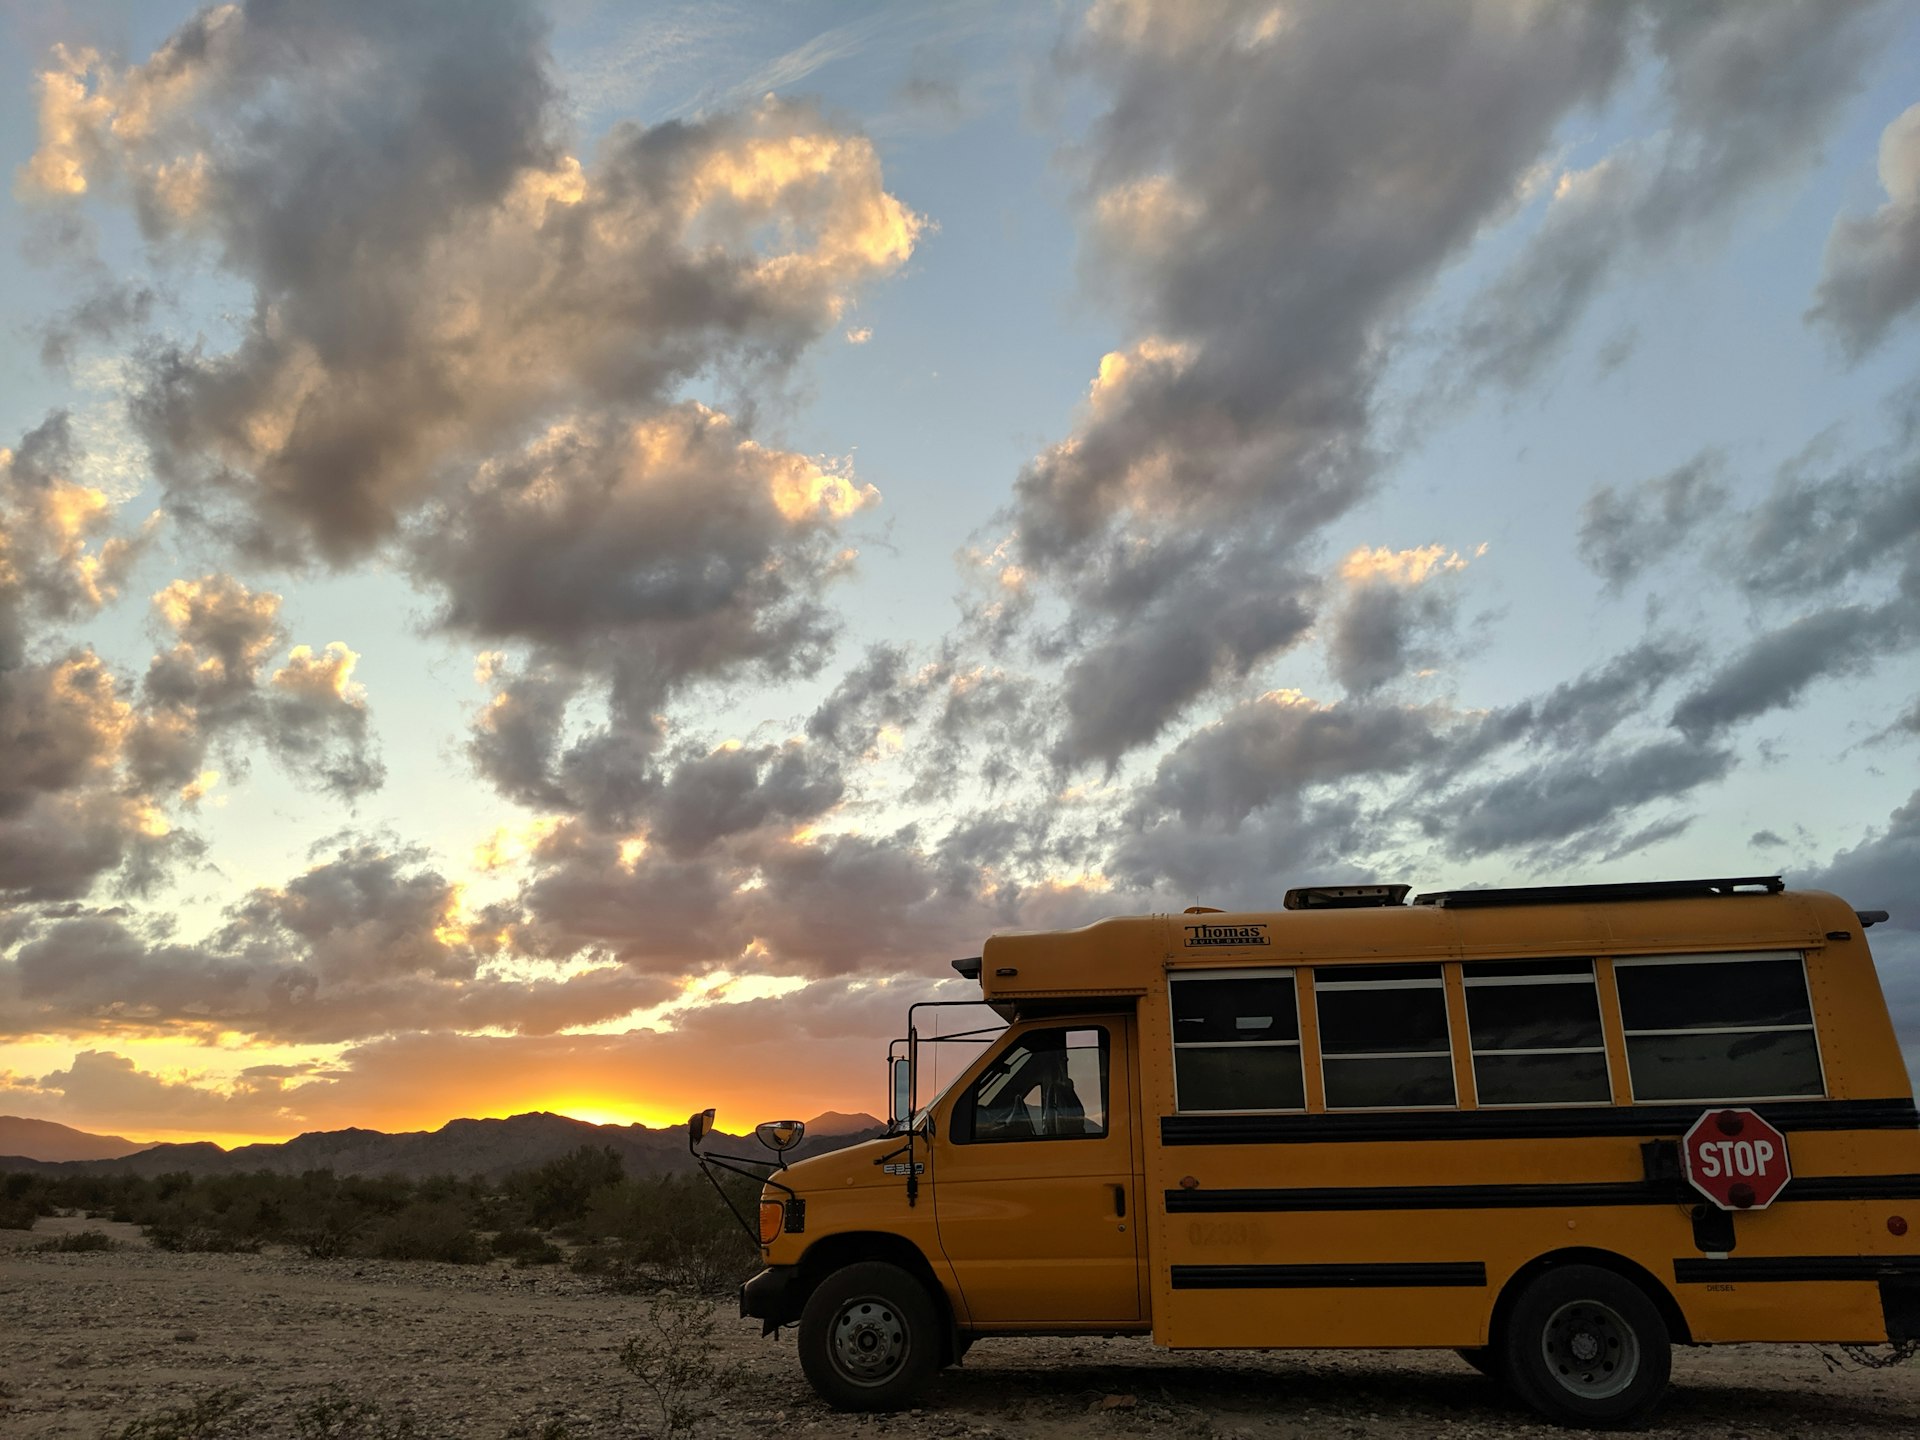 A short yellow school bus against a brilliant desert sunset